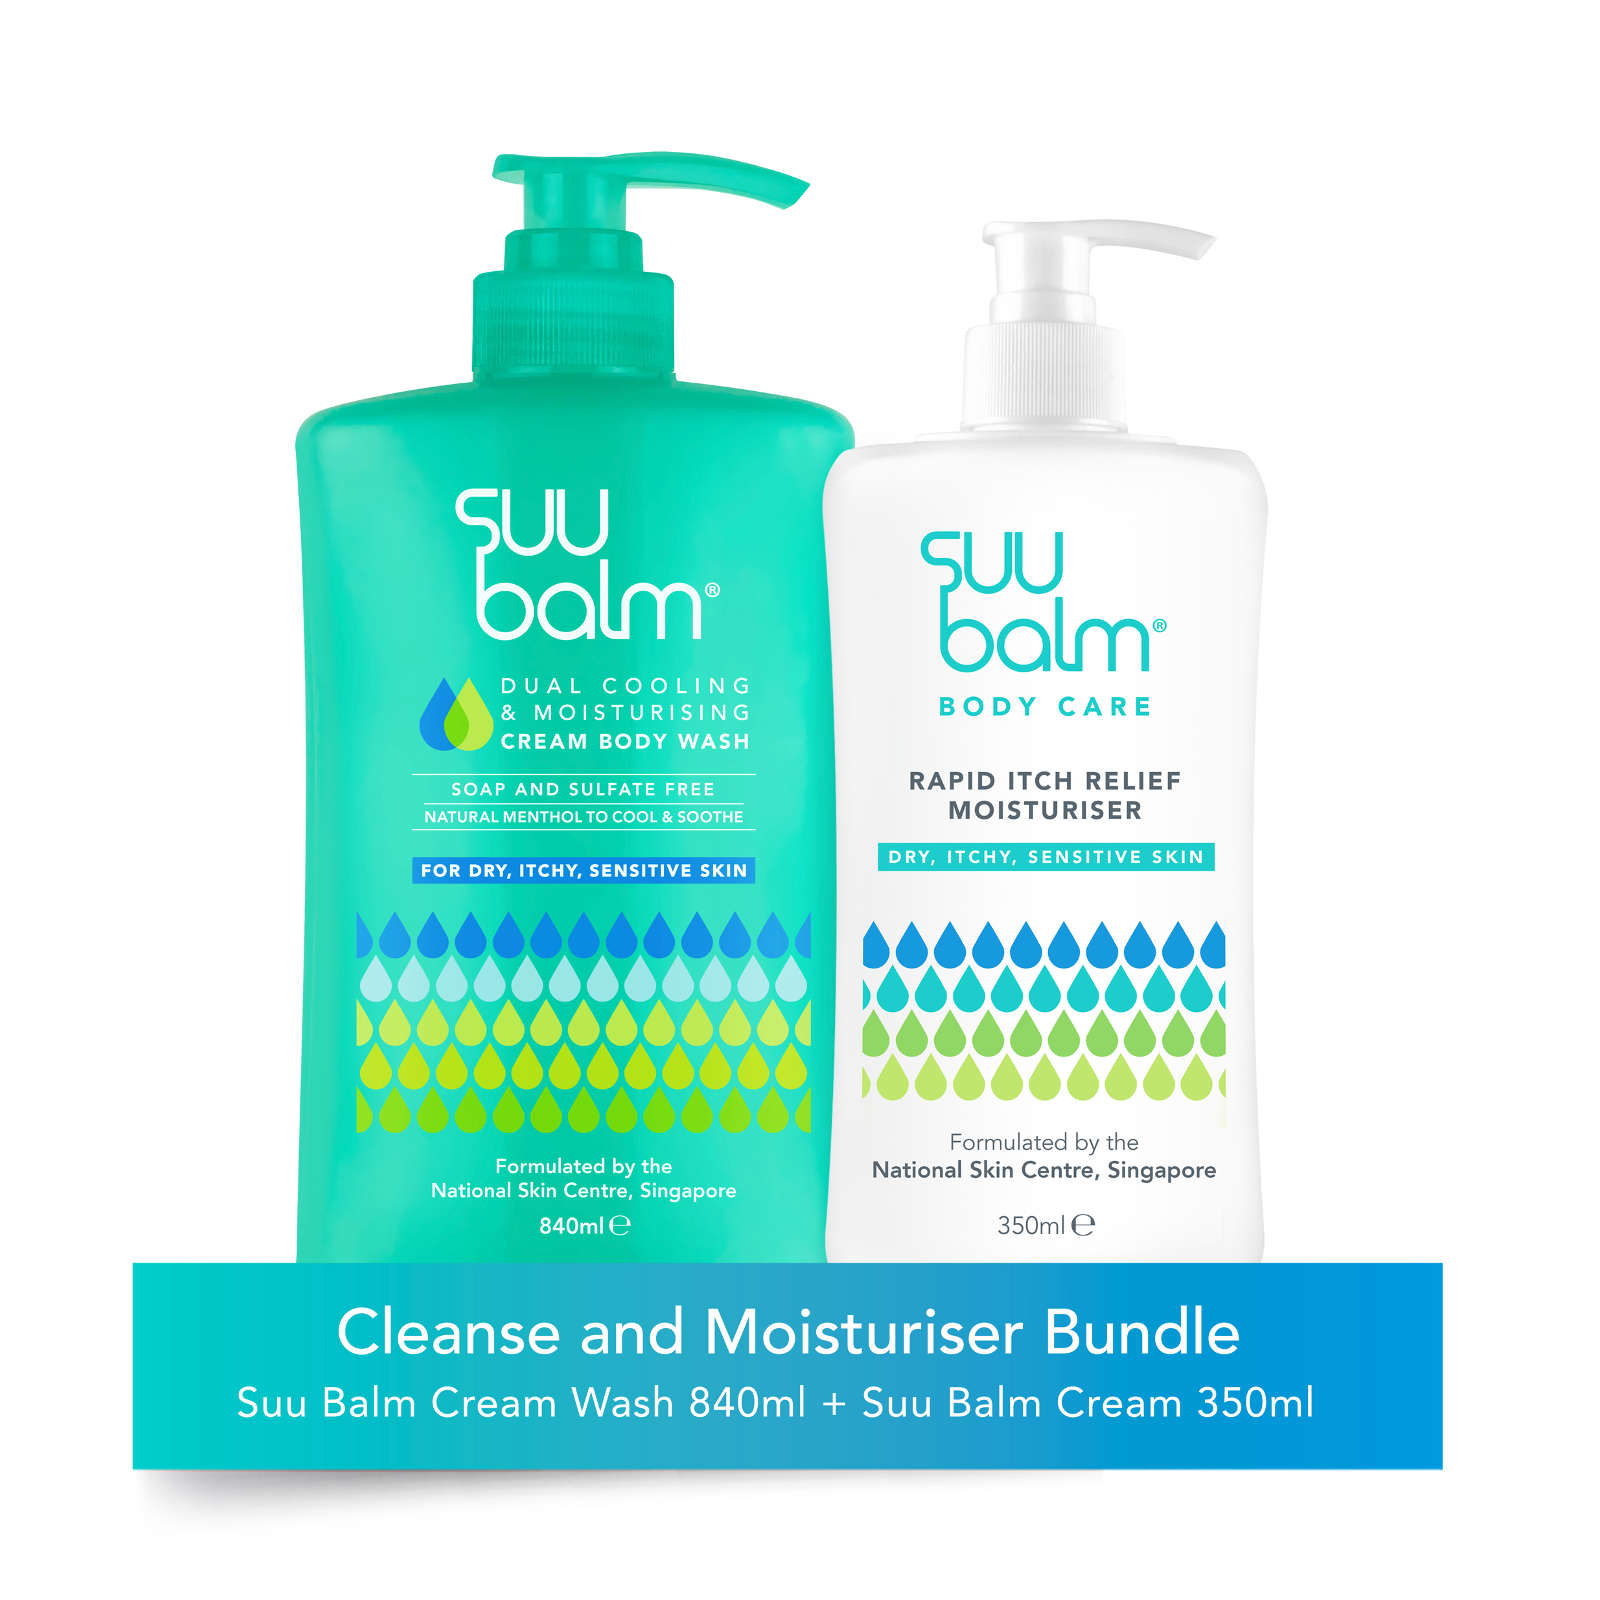 Suu Balm® Cleanse and Moisturiser Bundle - Cream Wash 840ml + Cream 350ml